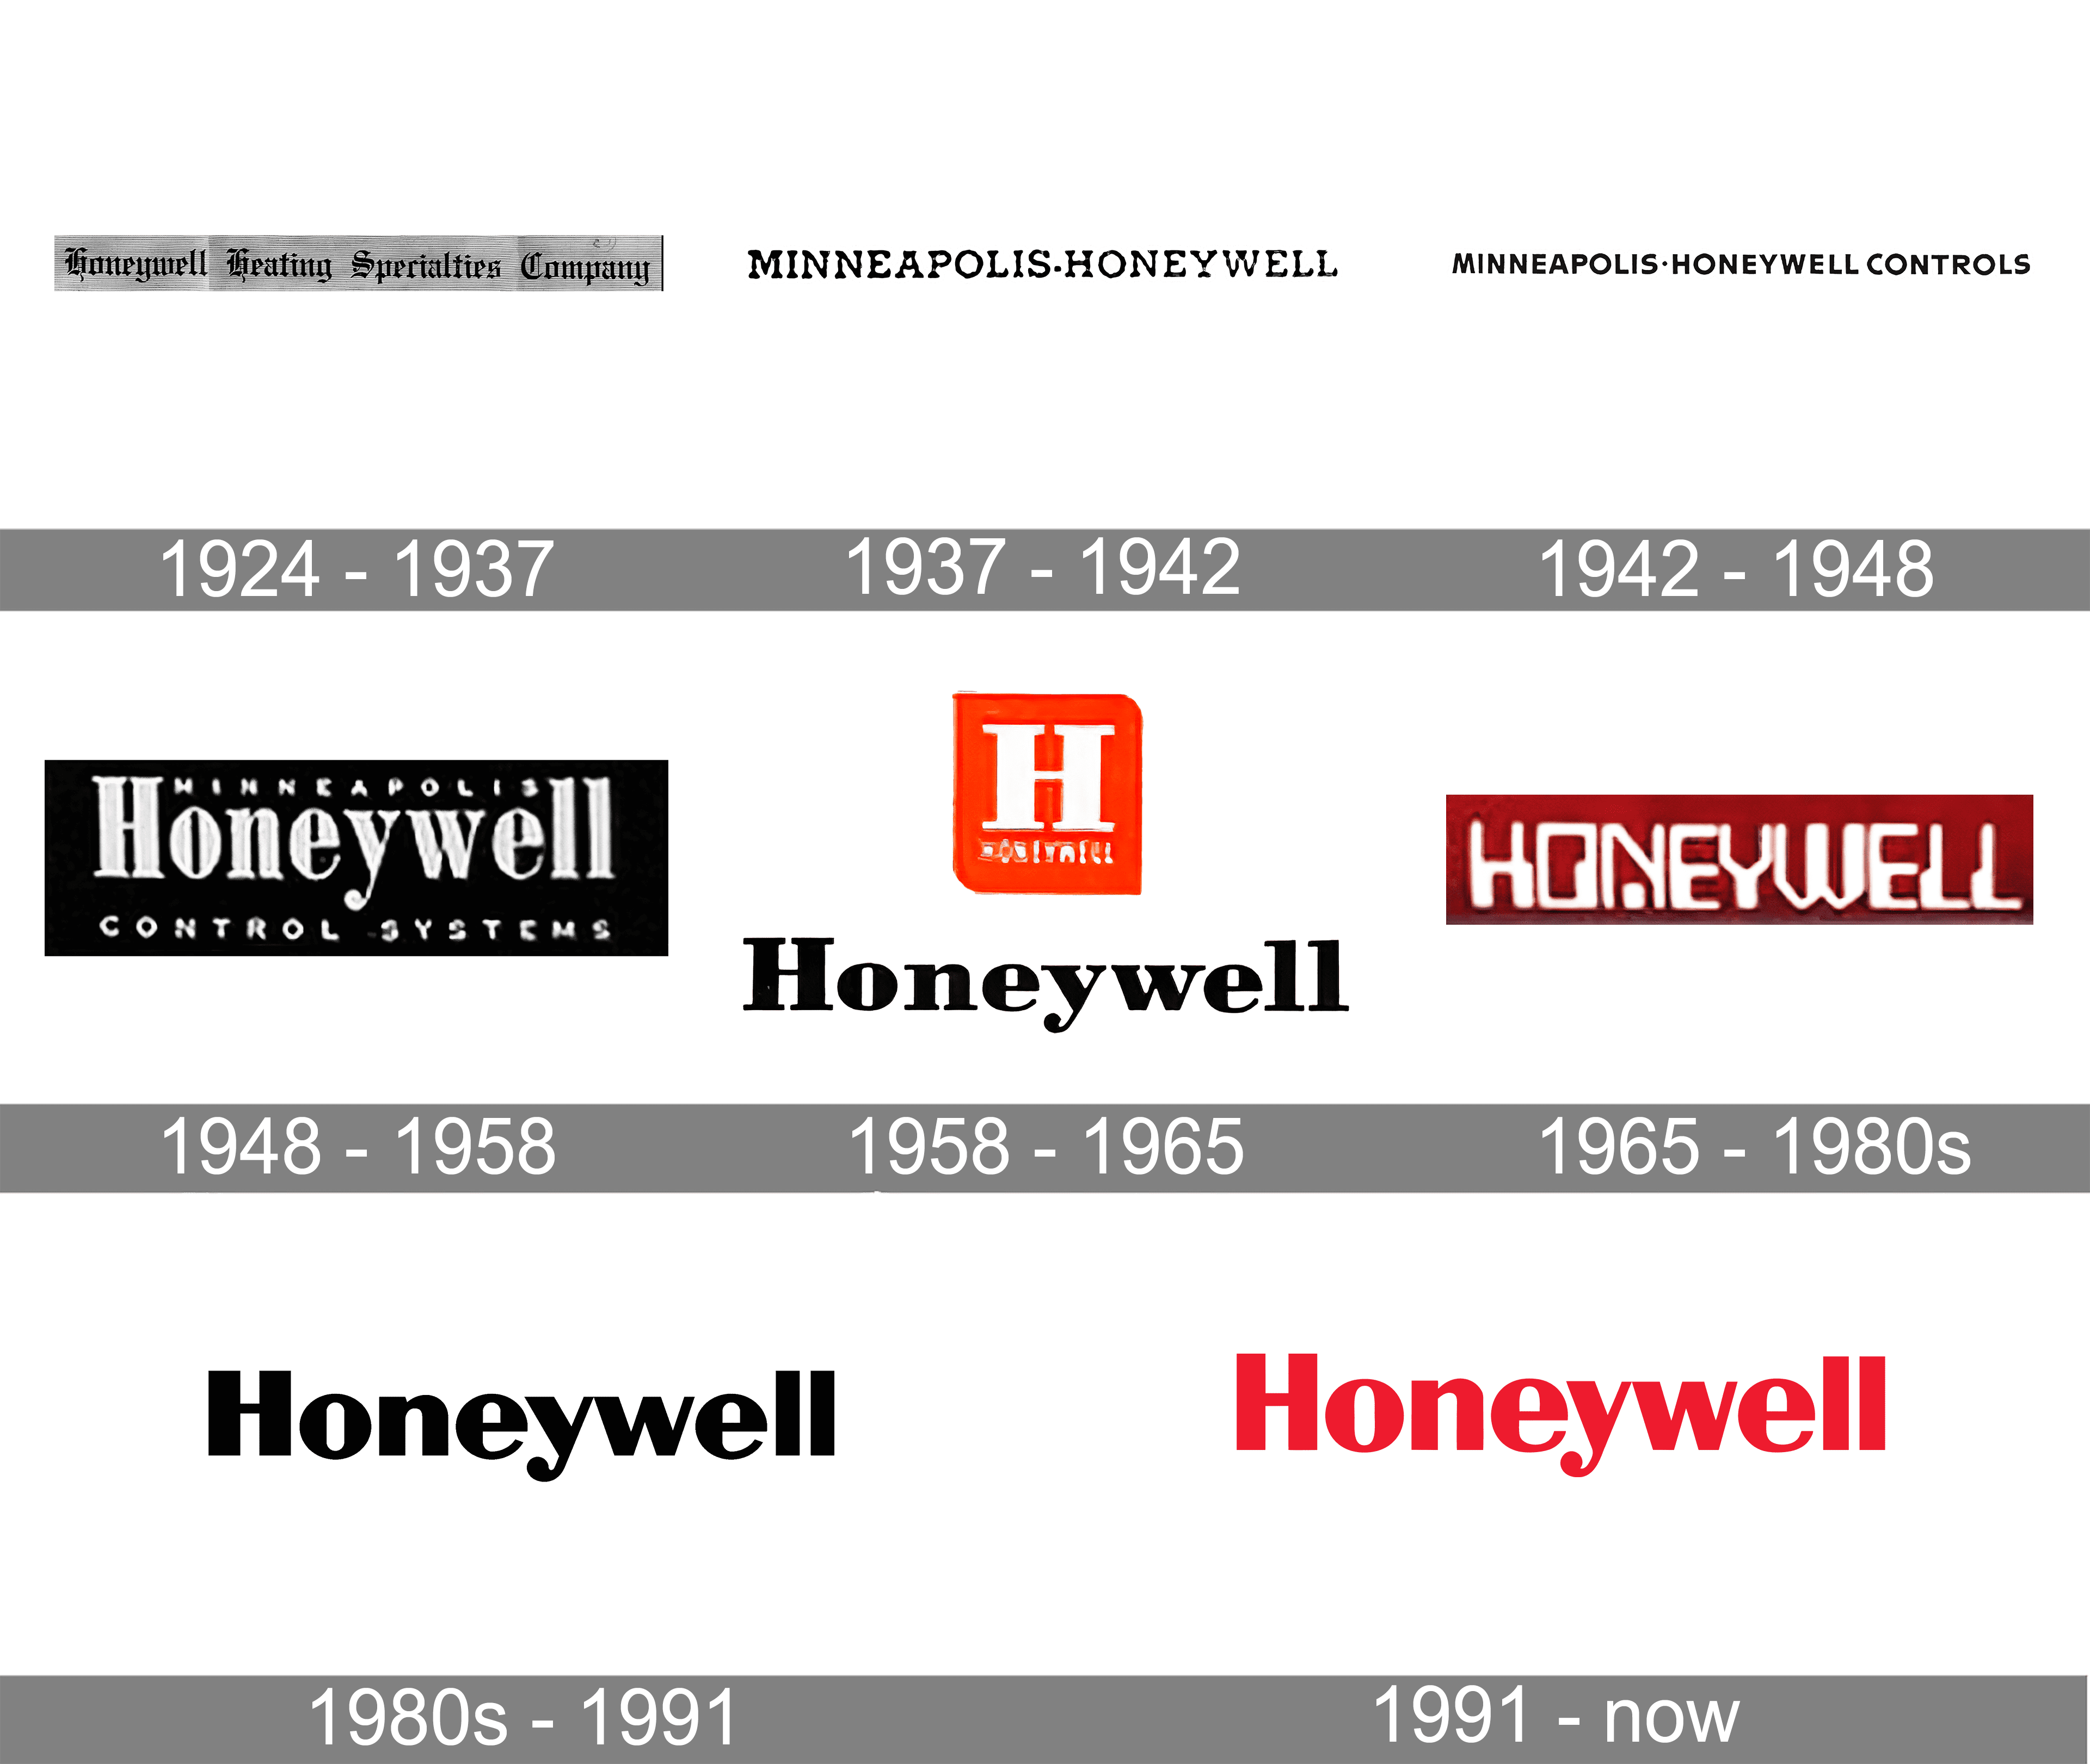 honeywell logo transparent